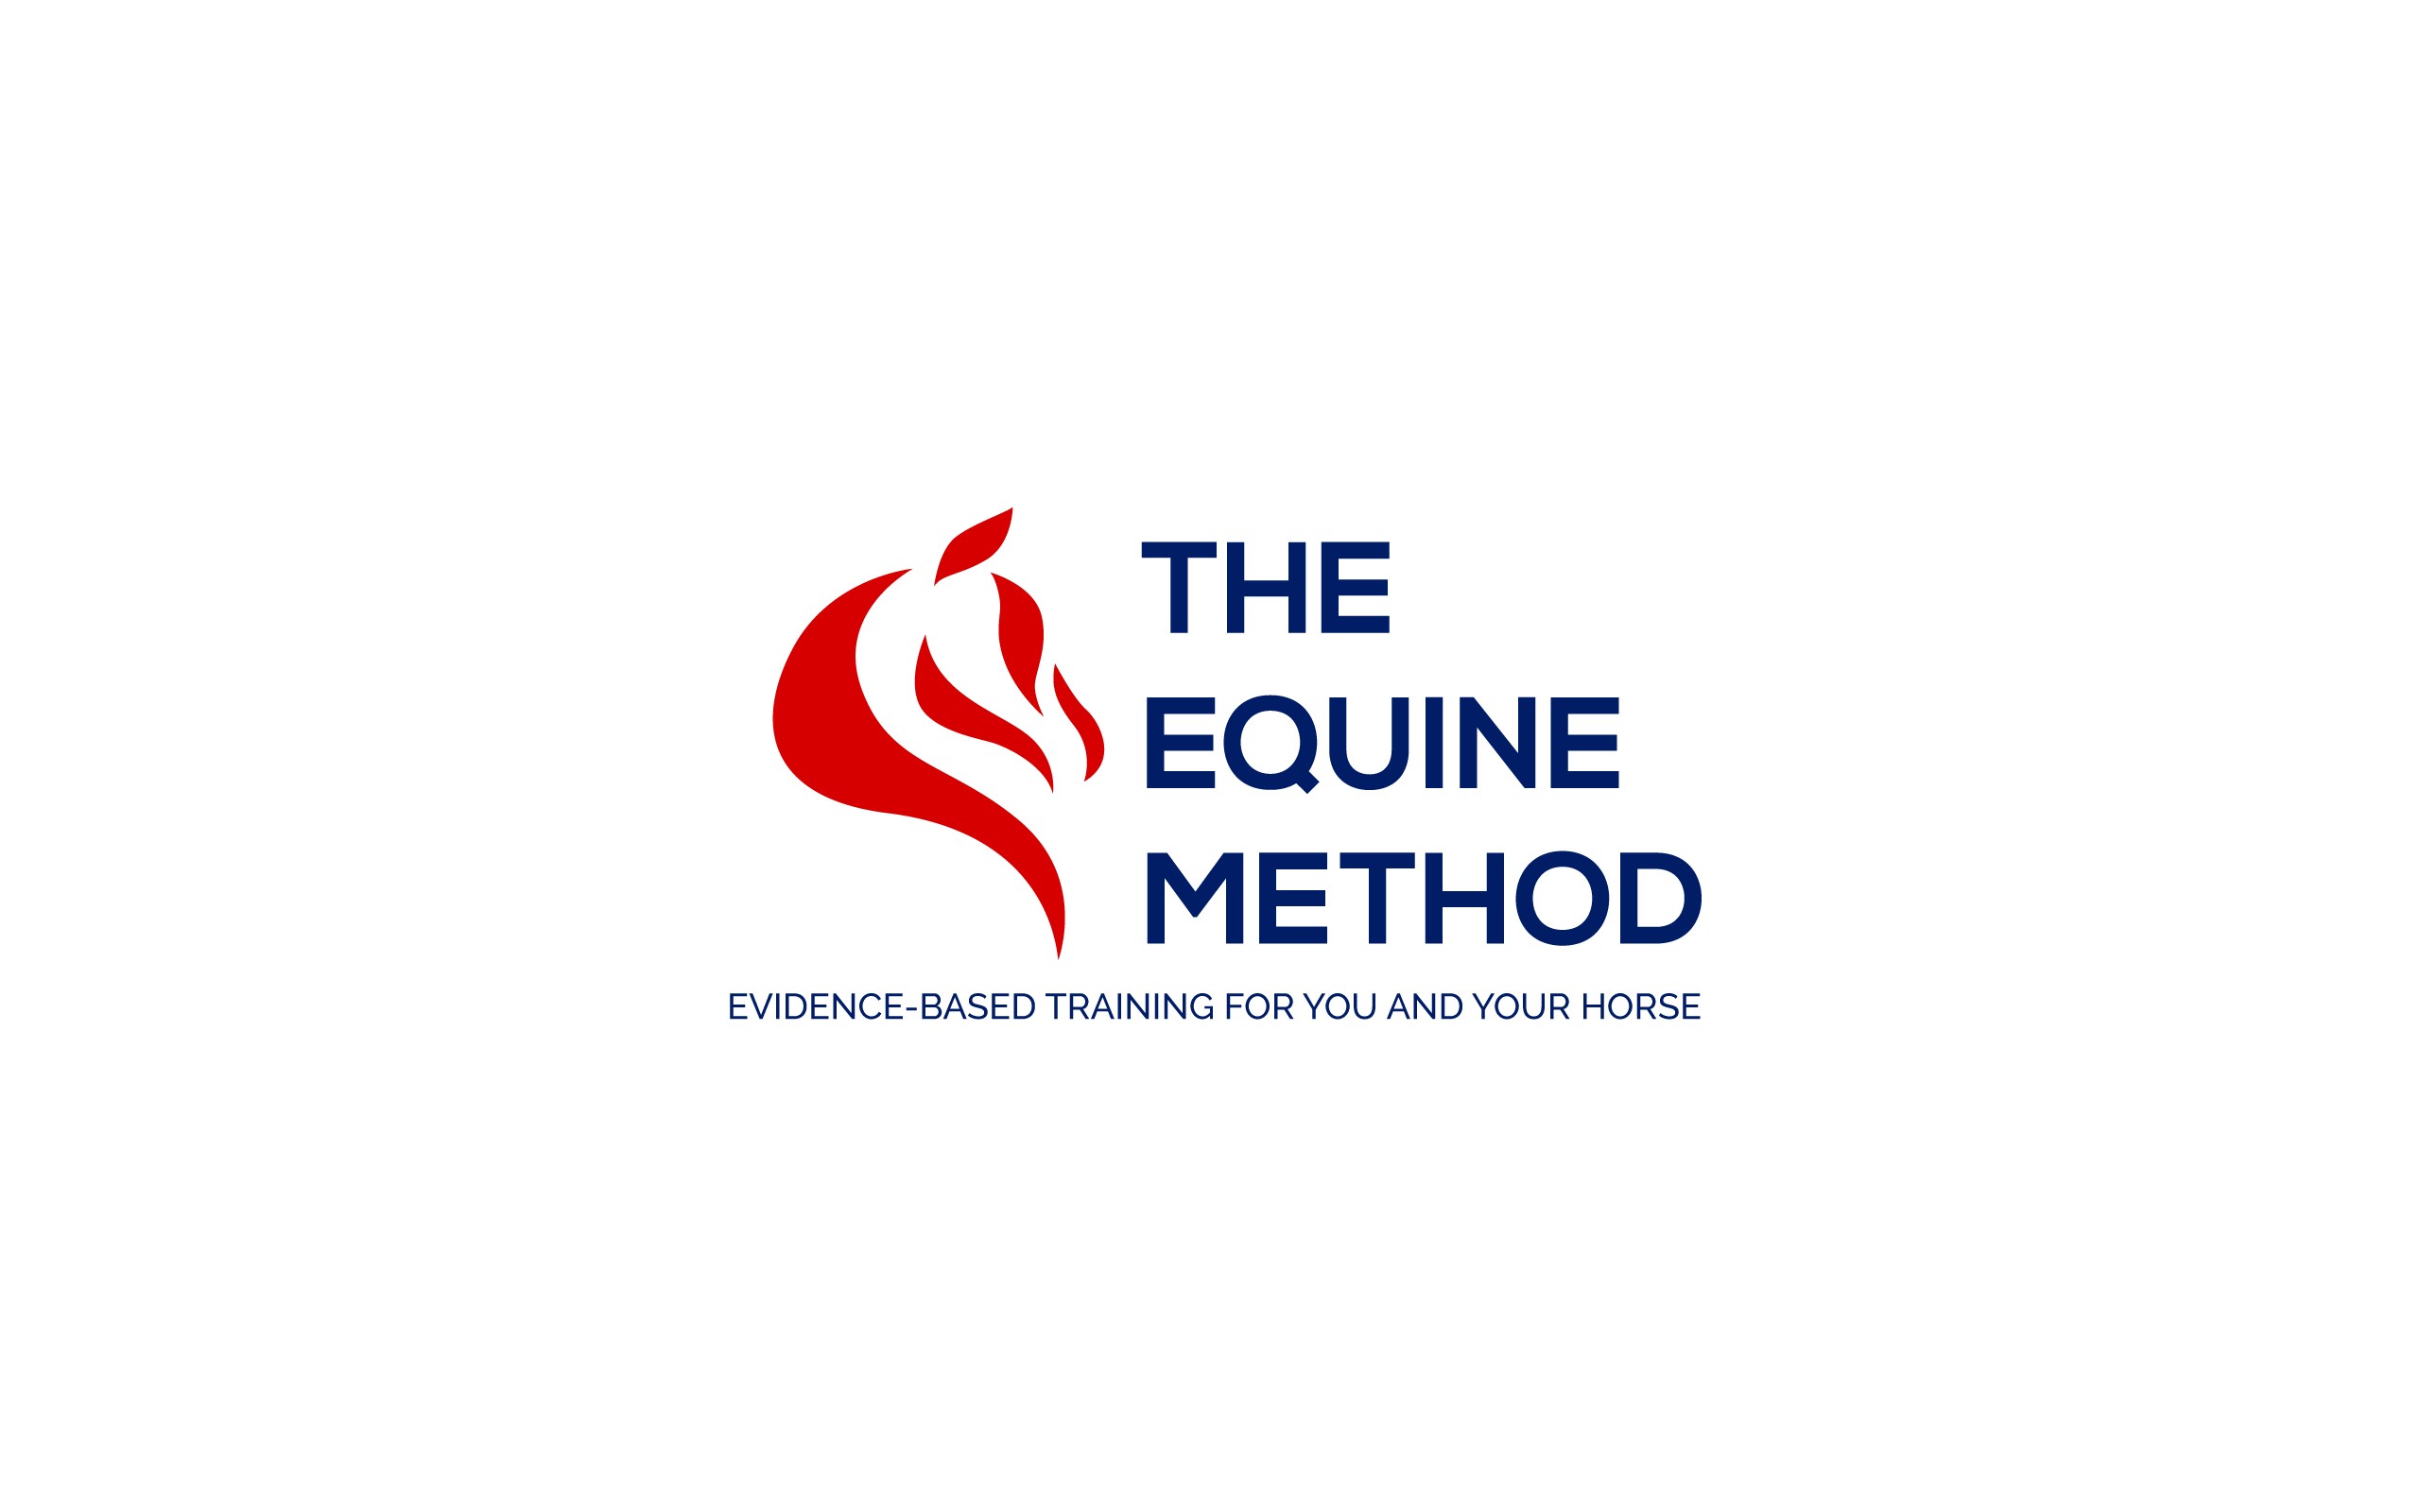 The Equine Method